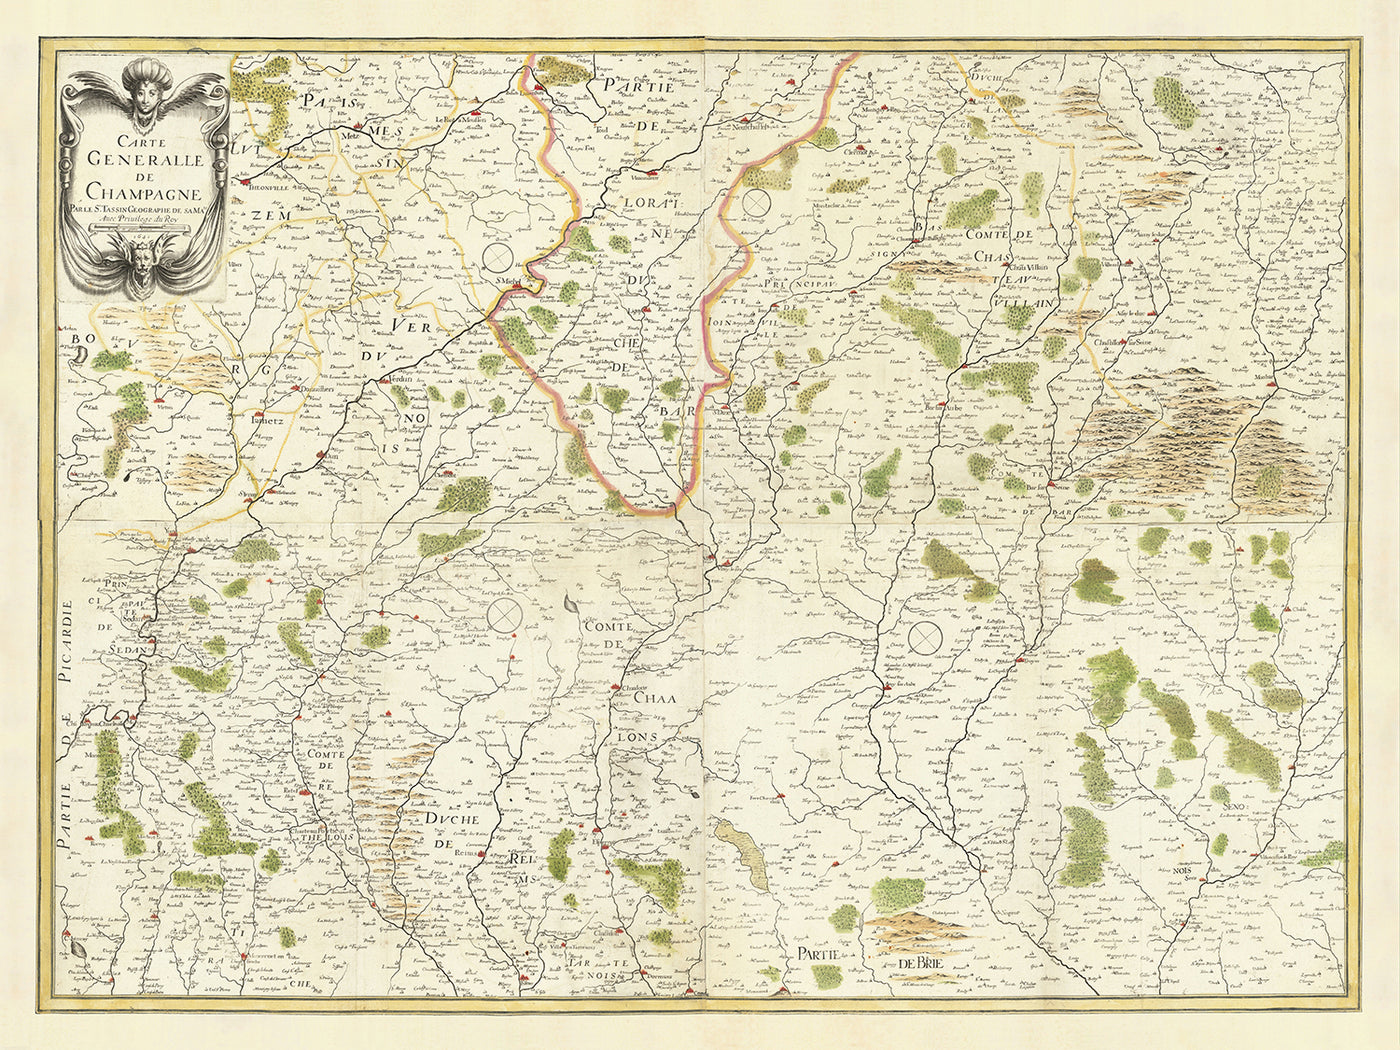 Old Map of the Champagne Region, France by Christopher Tassin, 1641: Reims, Épernay, Troyes, Châlons-en-Champagne, Vitry-le-François